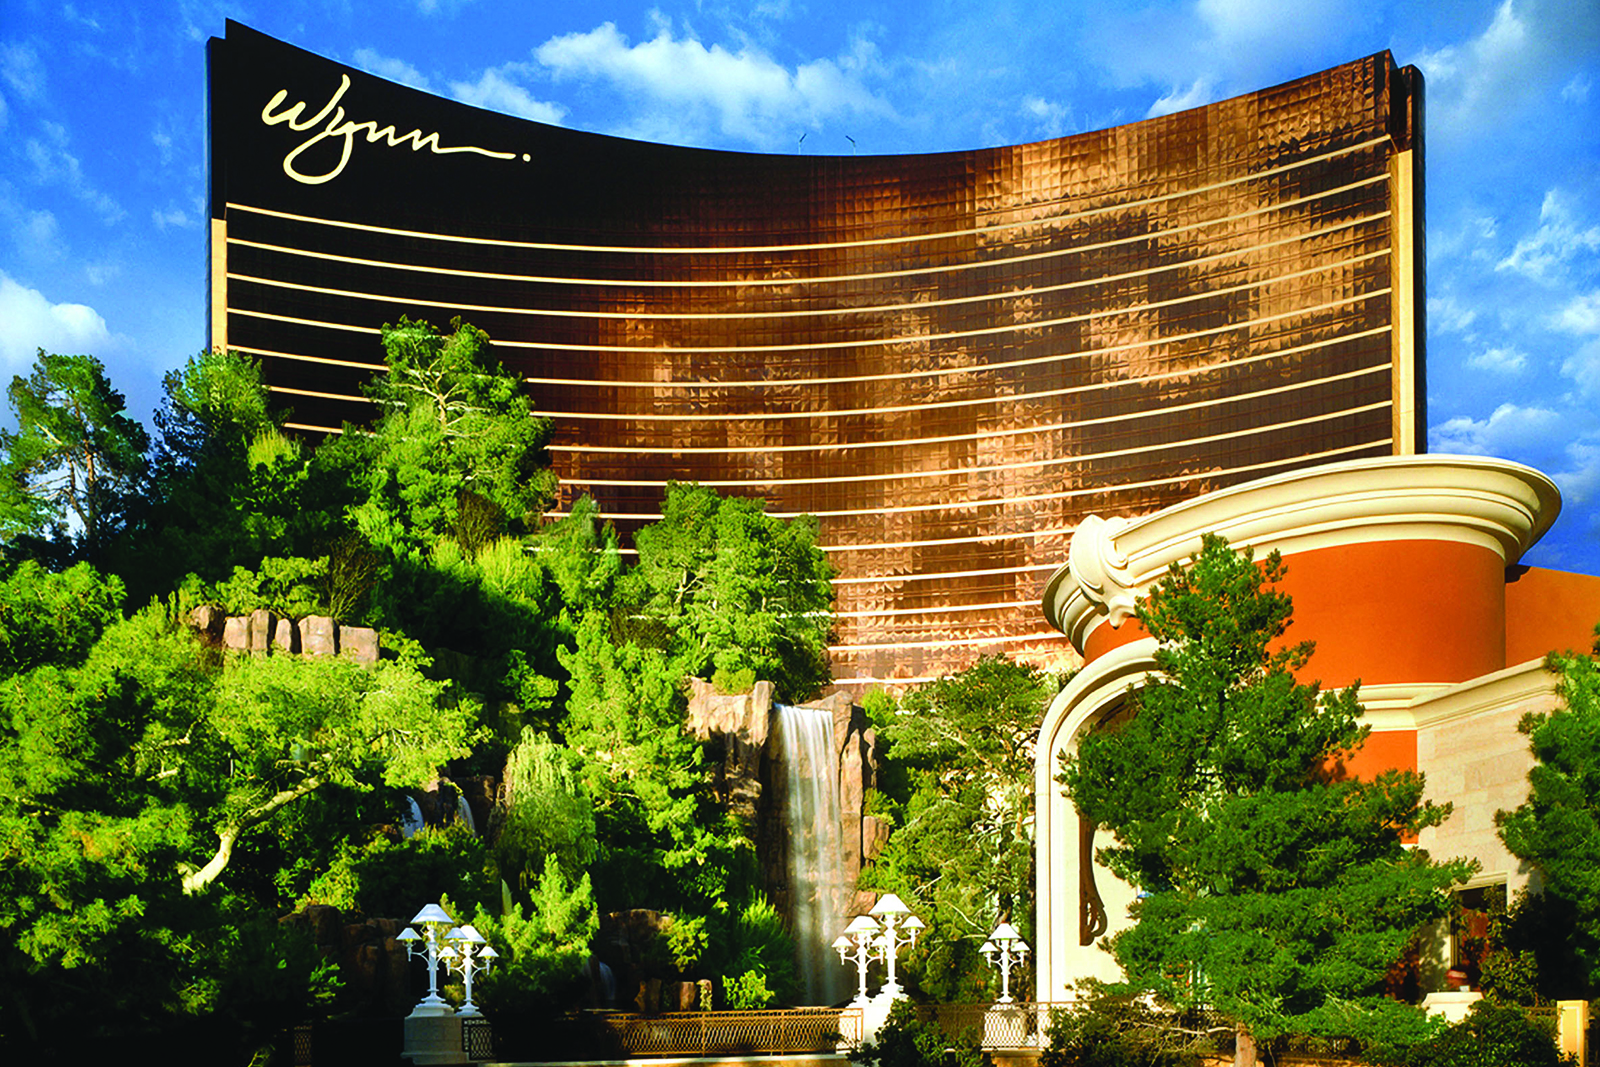 Wynn Las Vegas hotel, buffet, prices, casino, and restaurants.  Located in Las Vegas, NV.